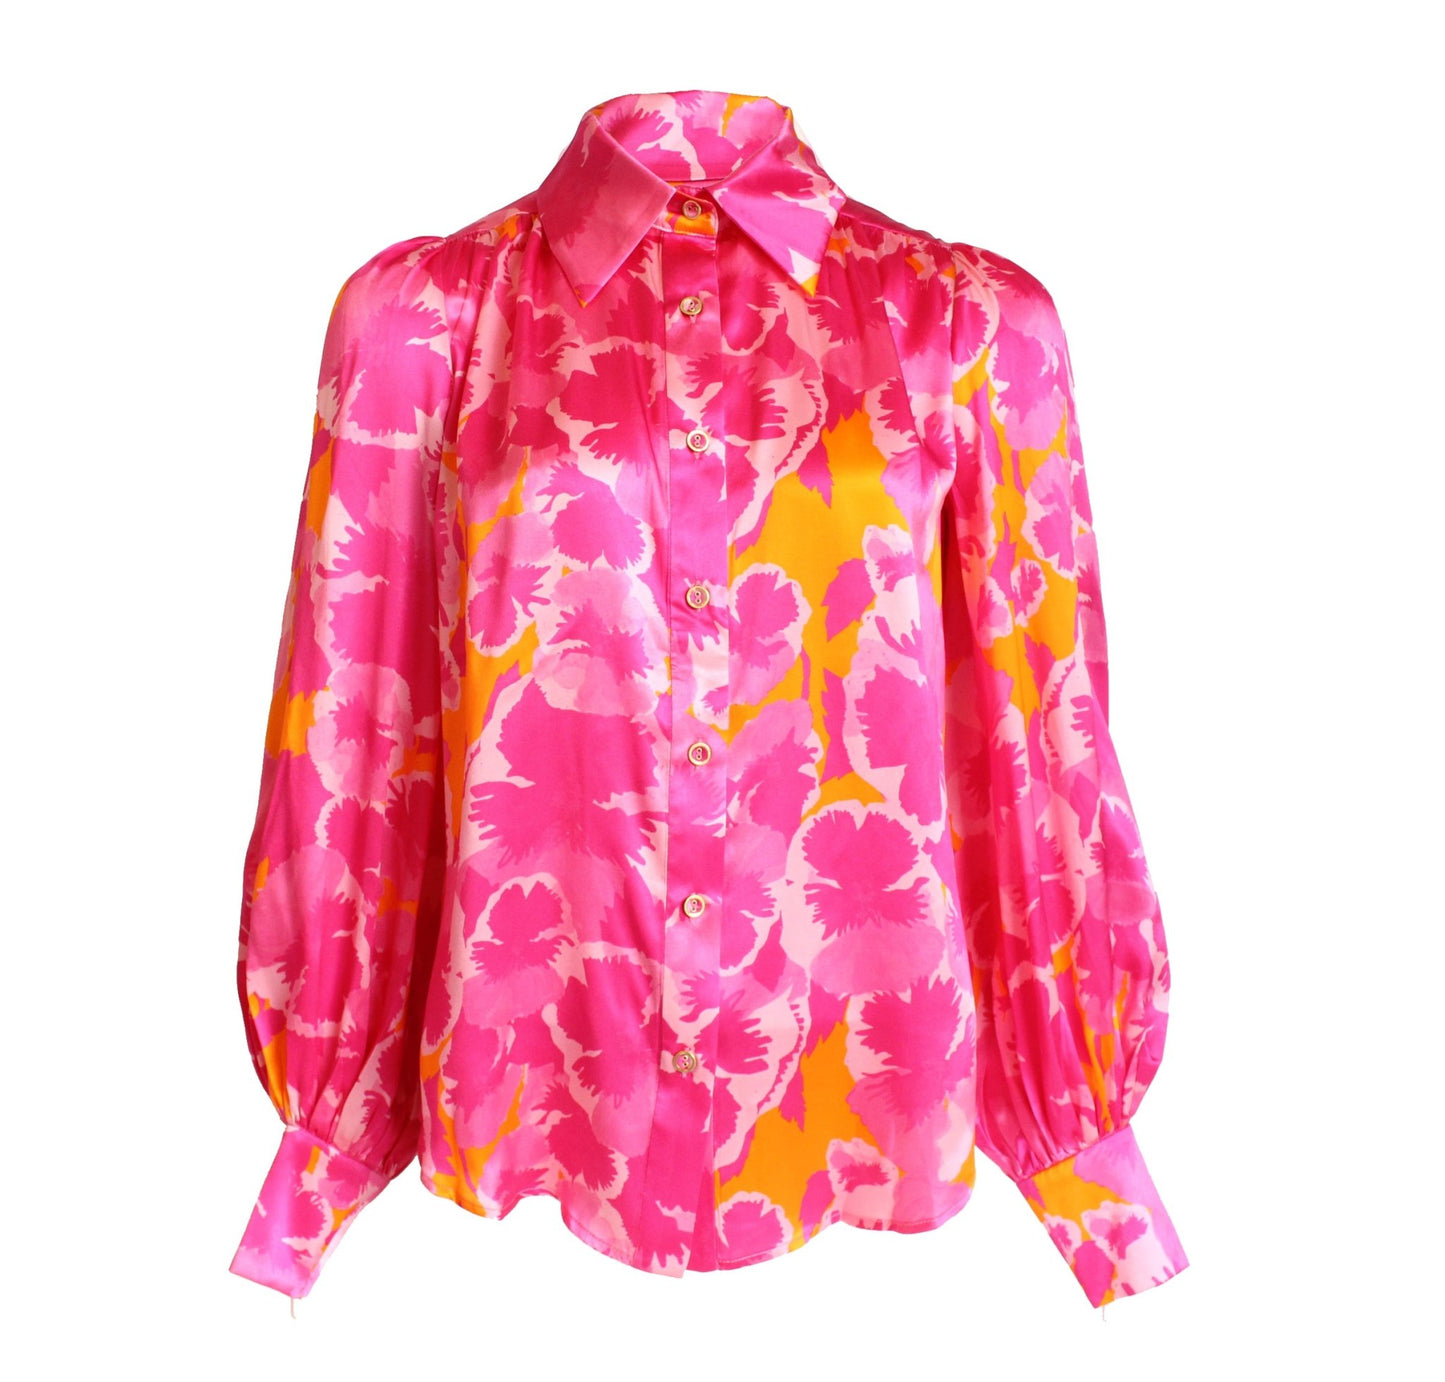 LeDoré Rosette Blouse - Viola Floral Hot Pink/Orange Silk - Sweepstake Winners™